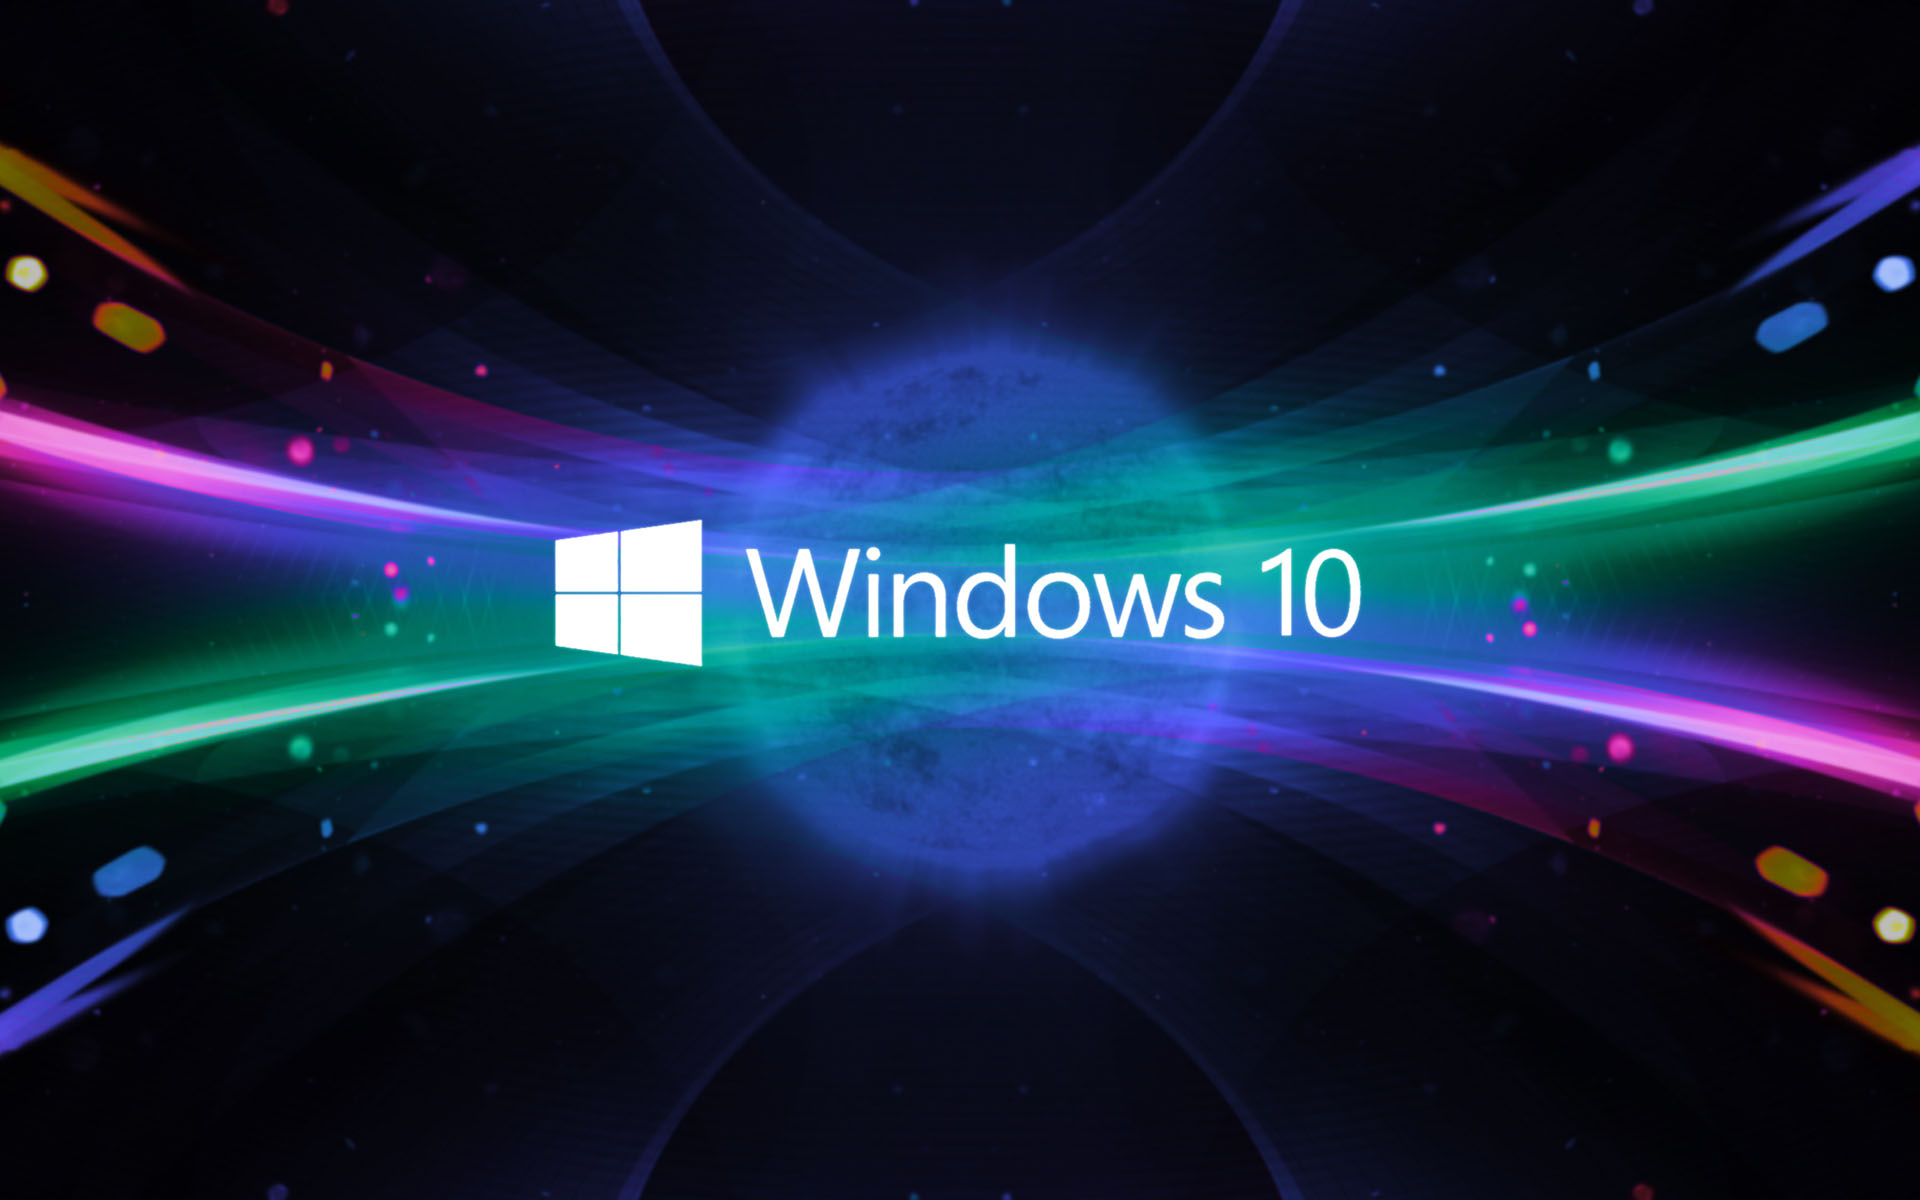 New Windows 10 Wallpaper For Desktop   Wallpapers